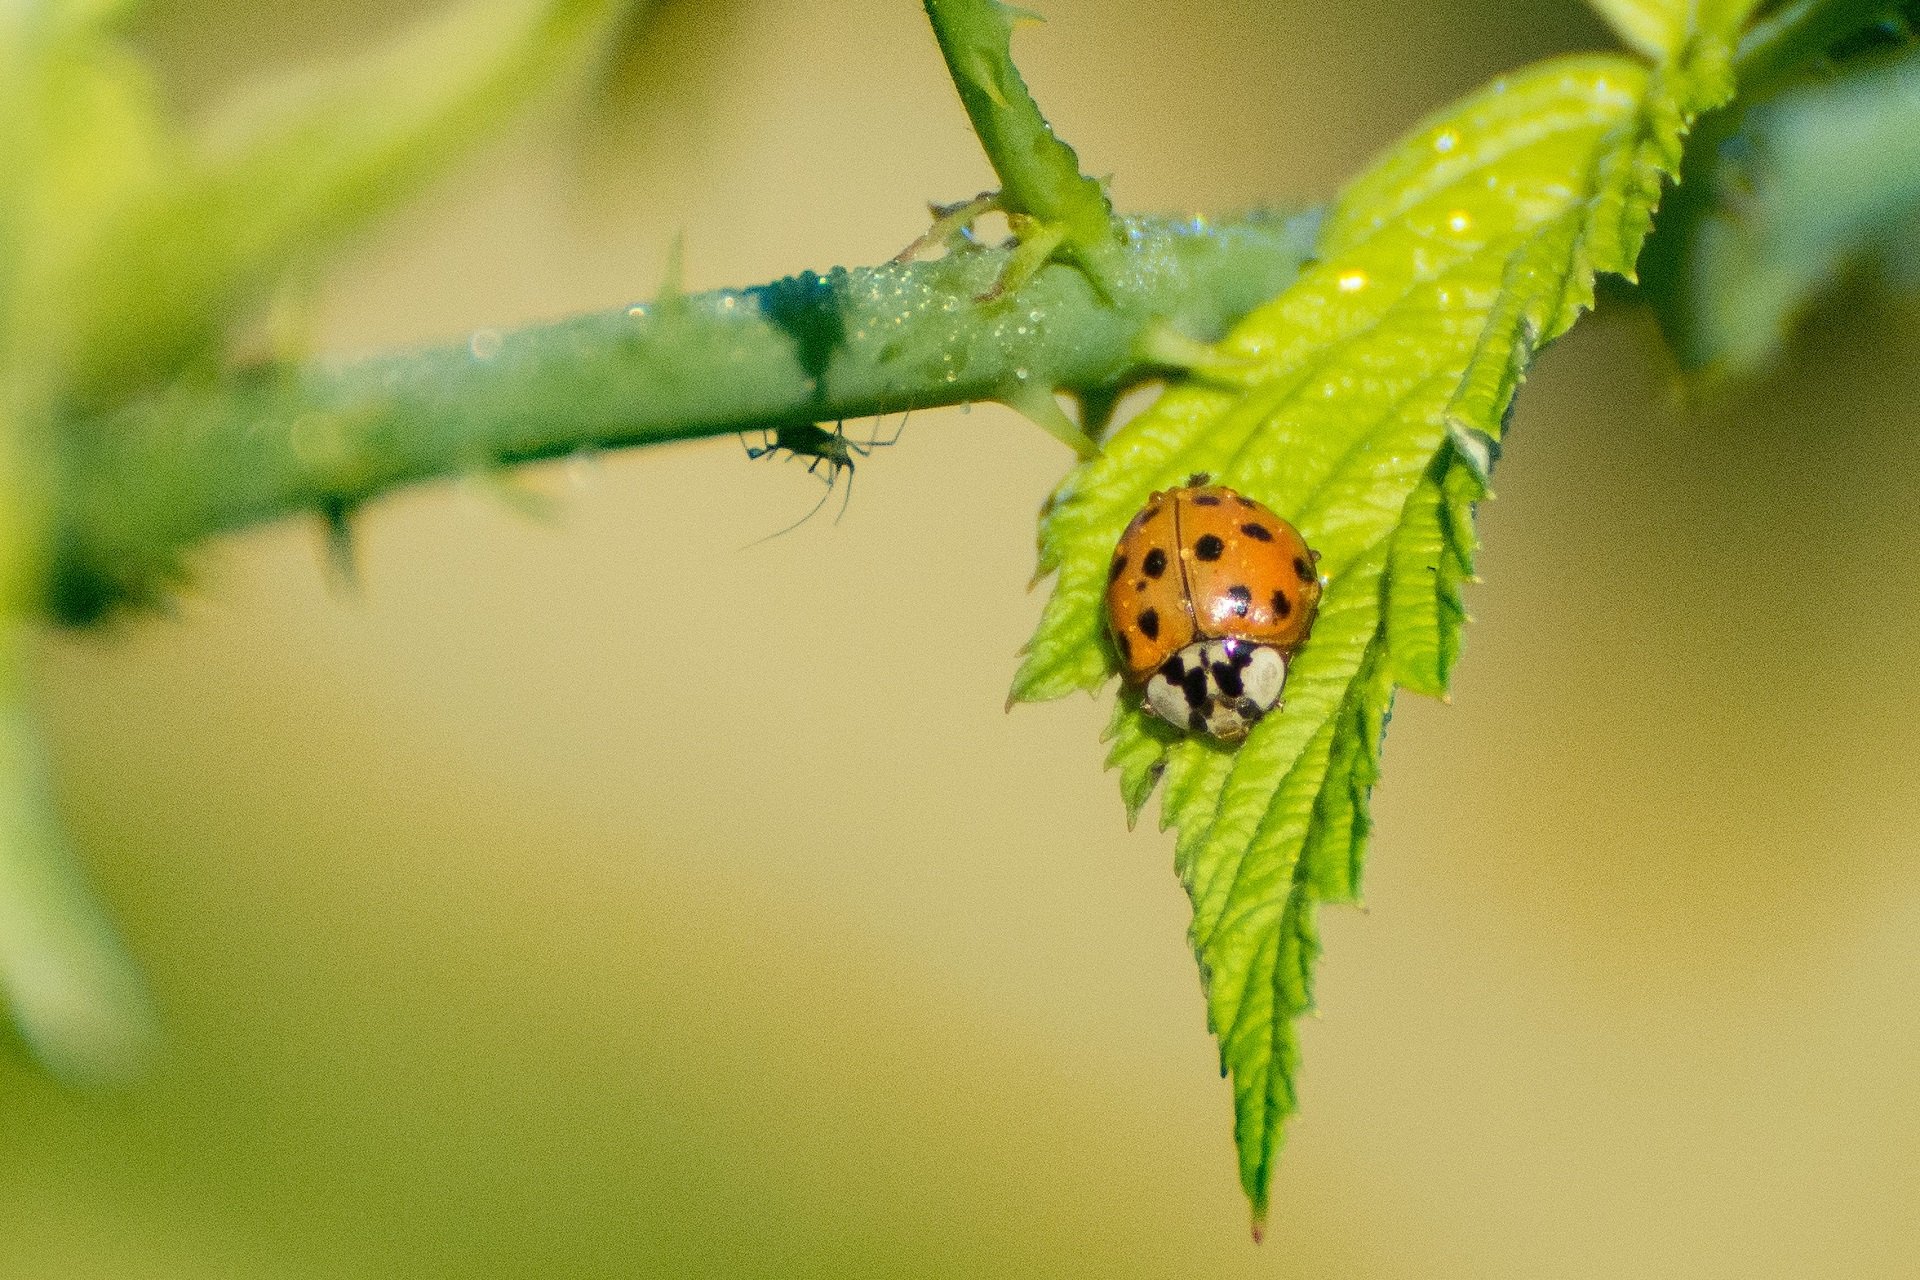 A ladybug dangles on a bright green leaf.